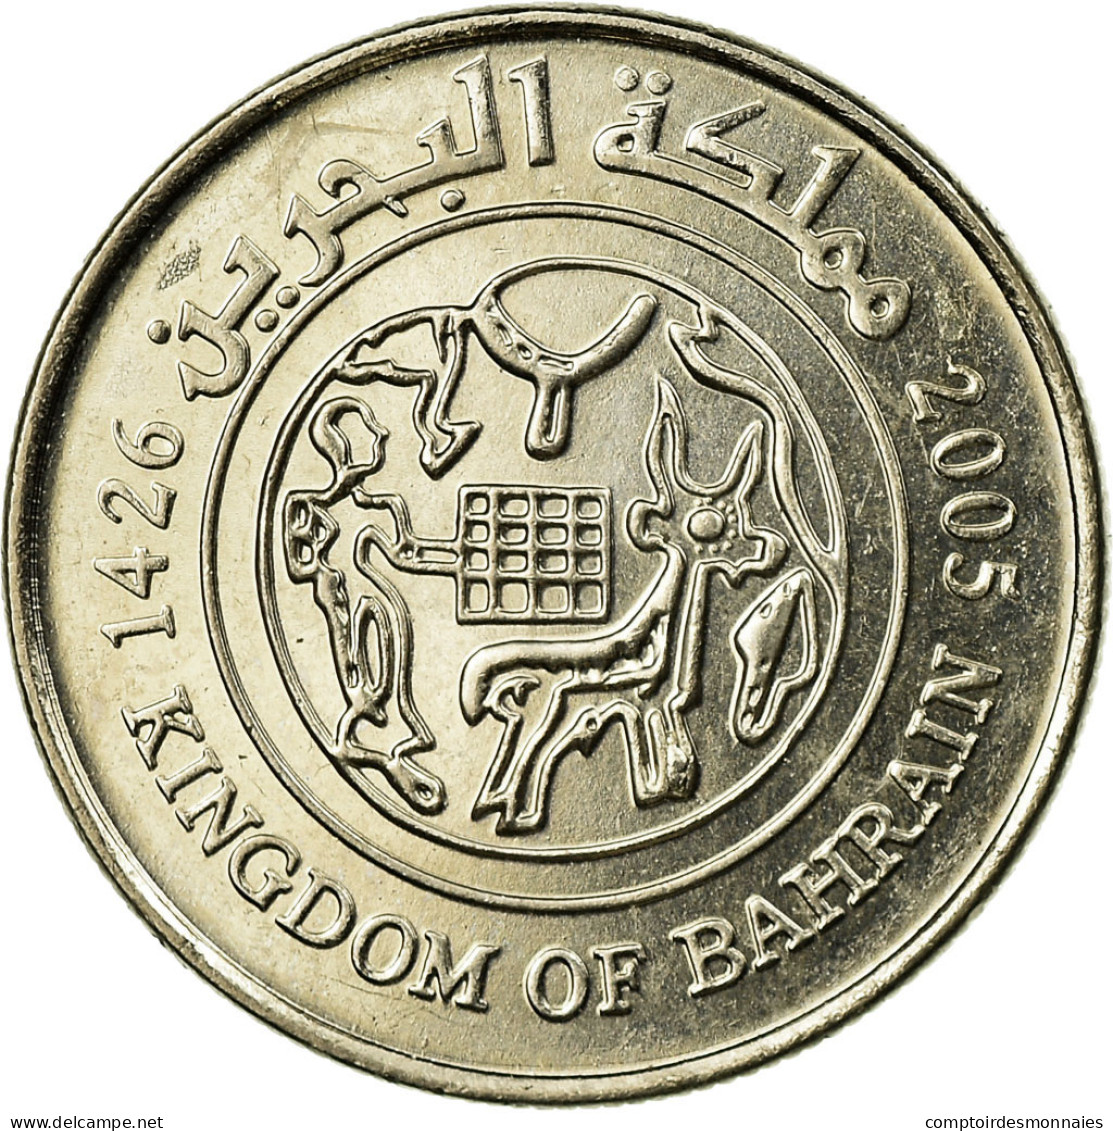 Monnaie, Bahrain, Hamed Bin Isa, 25 Fils, 2005, SUP, Copper-nickel, KM:24 - Bahreïn